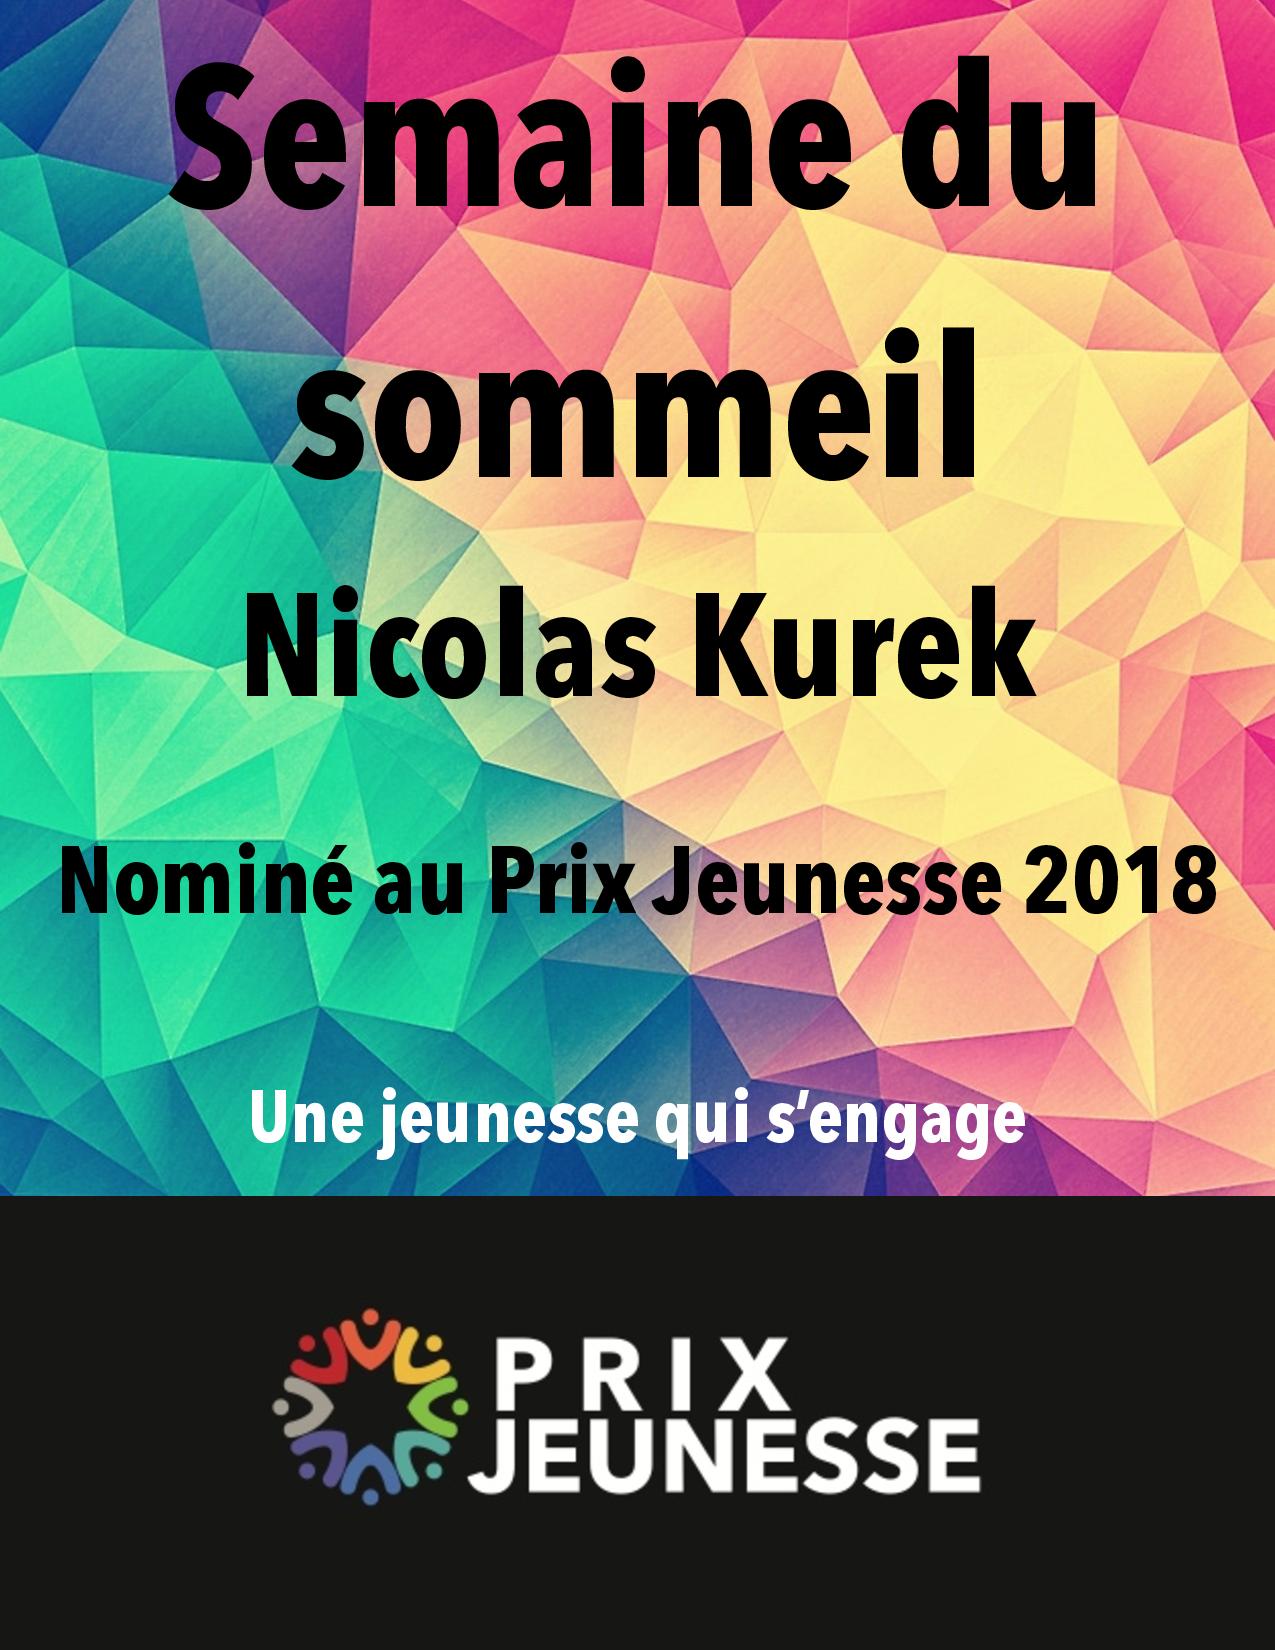 Candidat  Semaine du Sommeil - Nicolas Kurek     